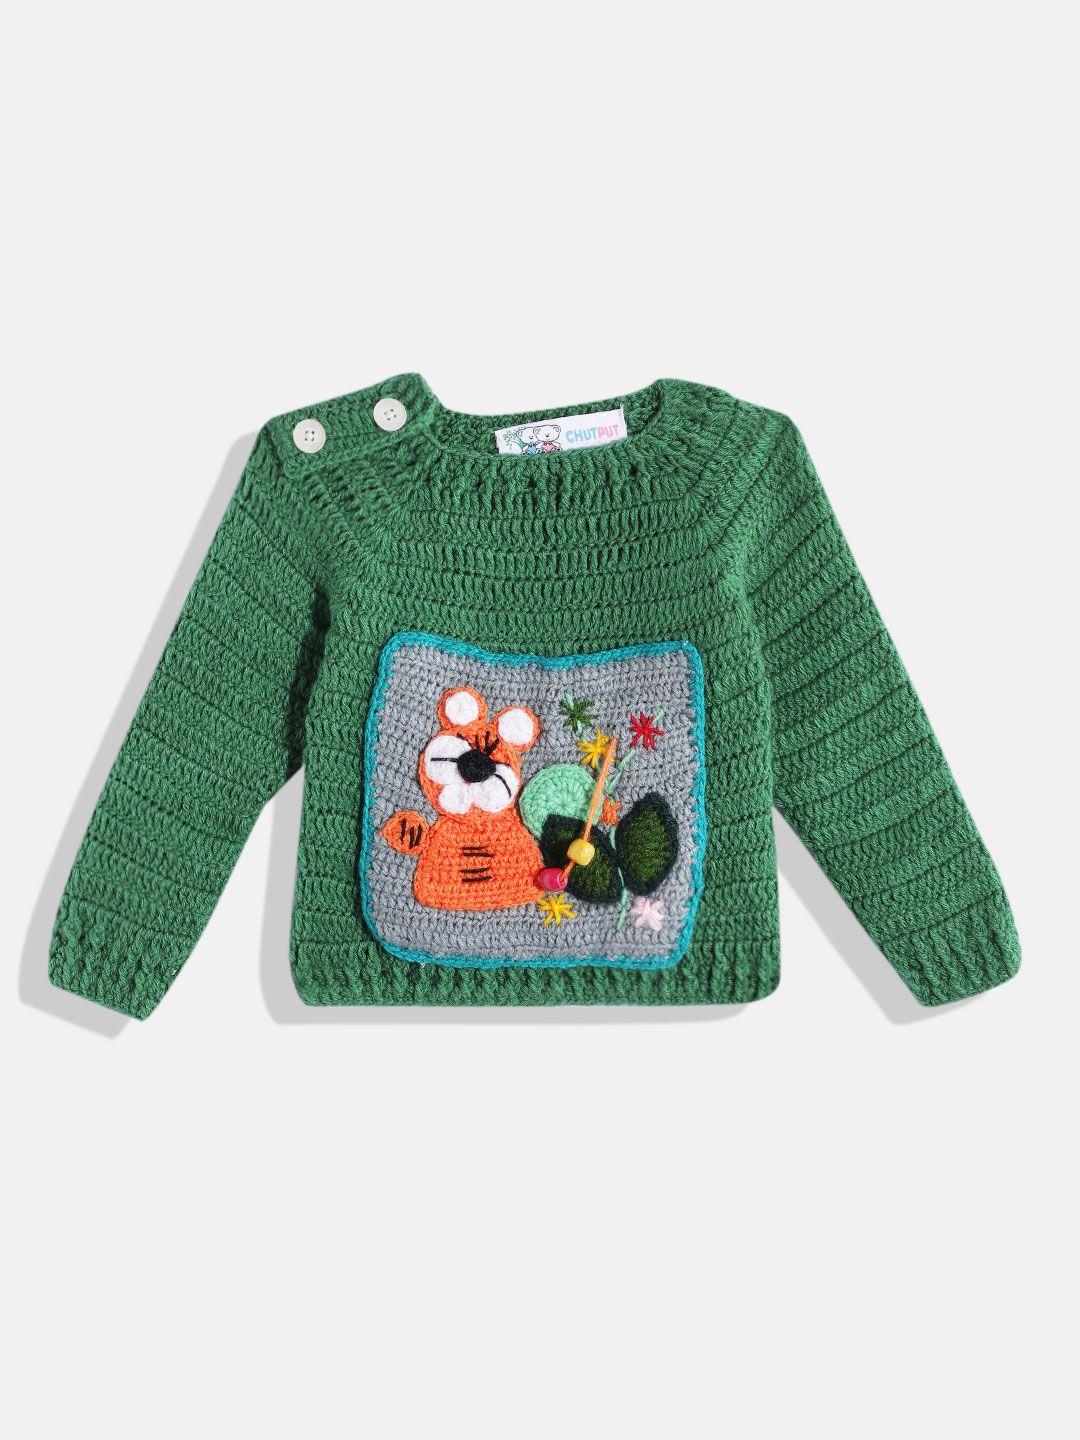 chutput unisex kids woollen pullover with embroidered detail